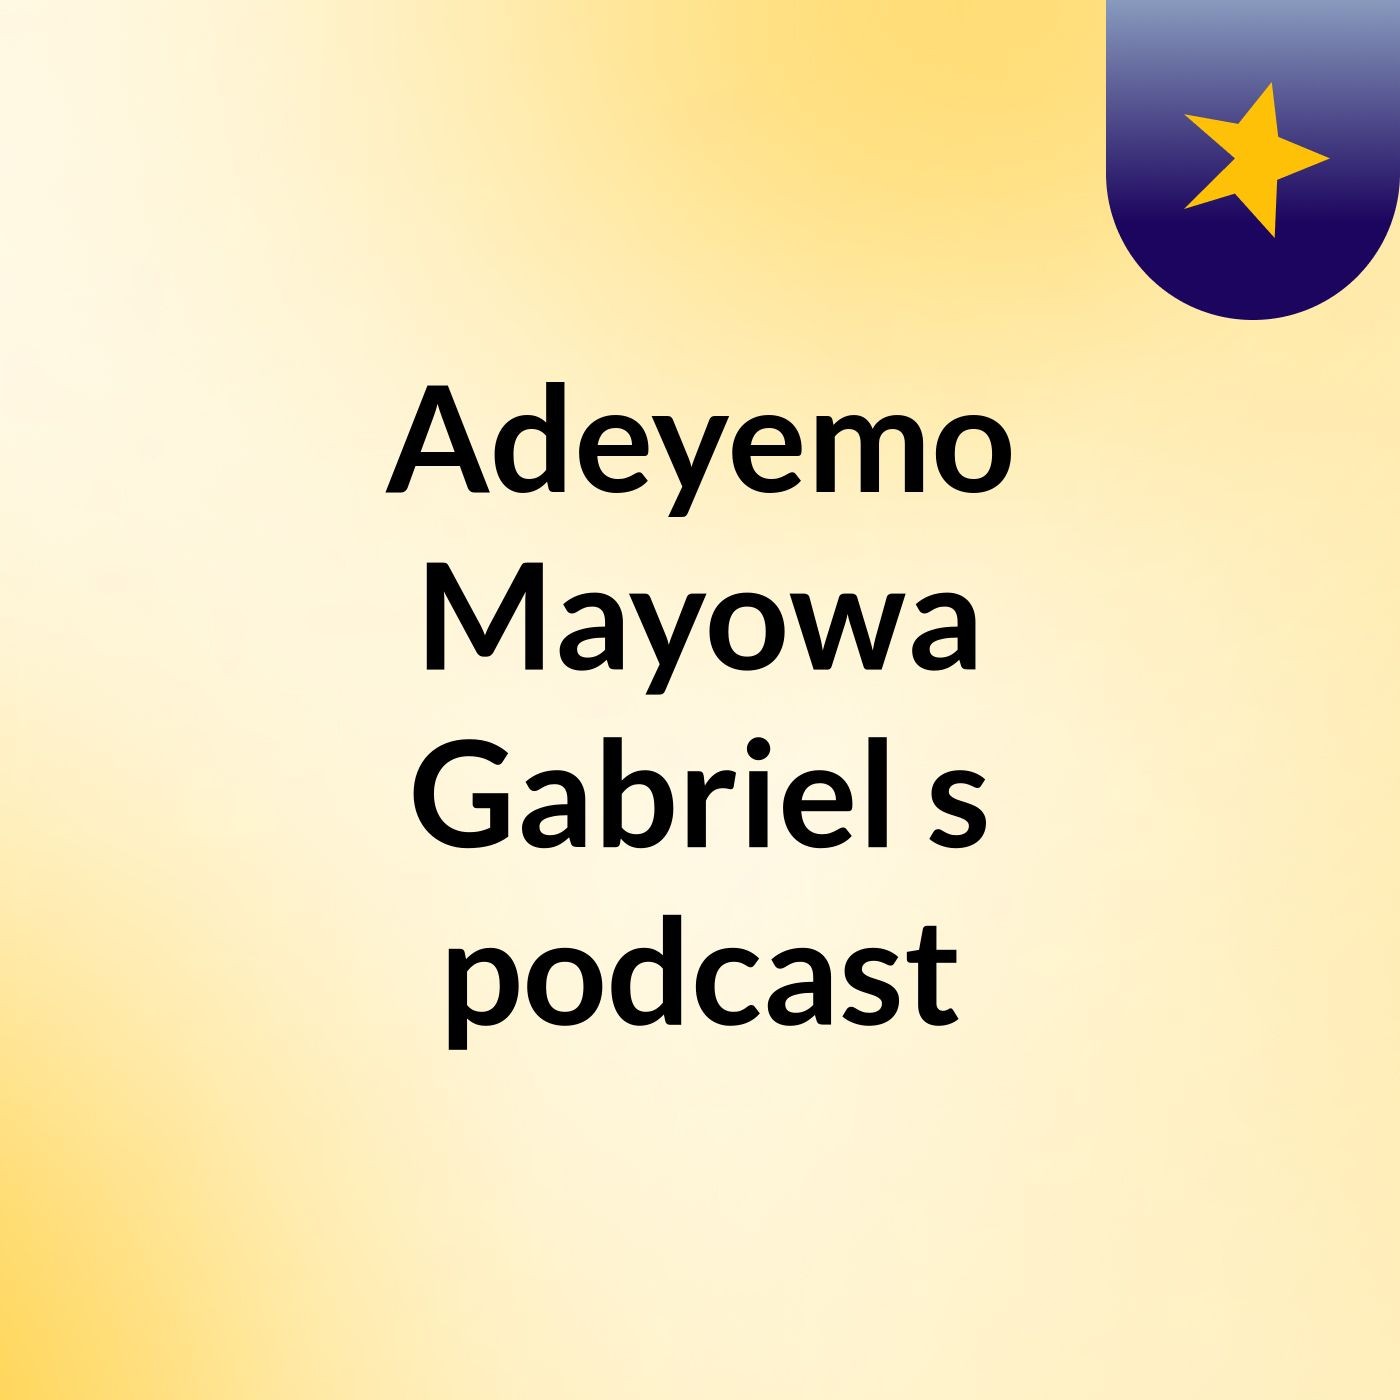 Episode 7 - Adeyemo Mayowa Gabriel's podcast